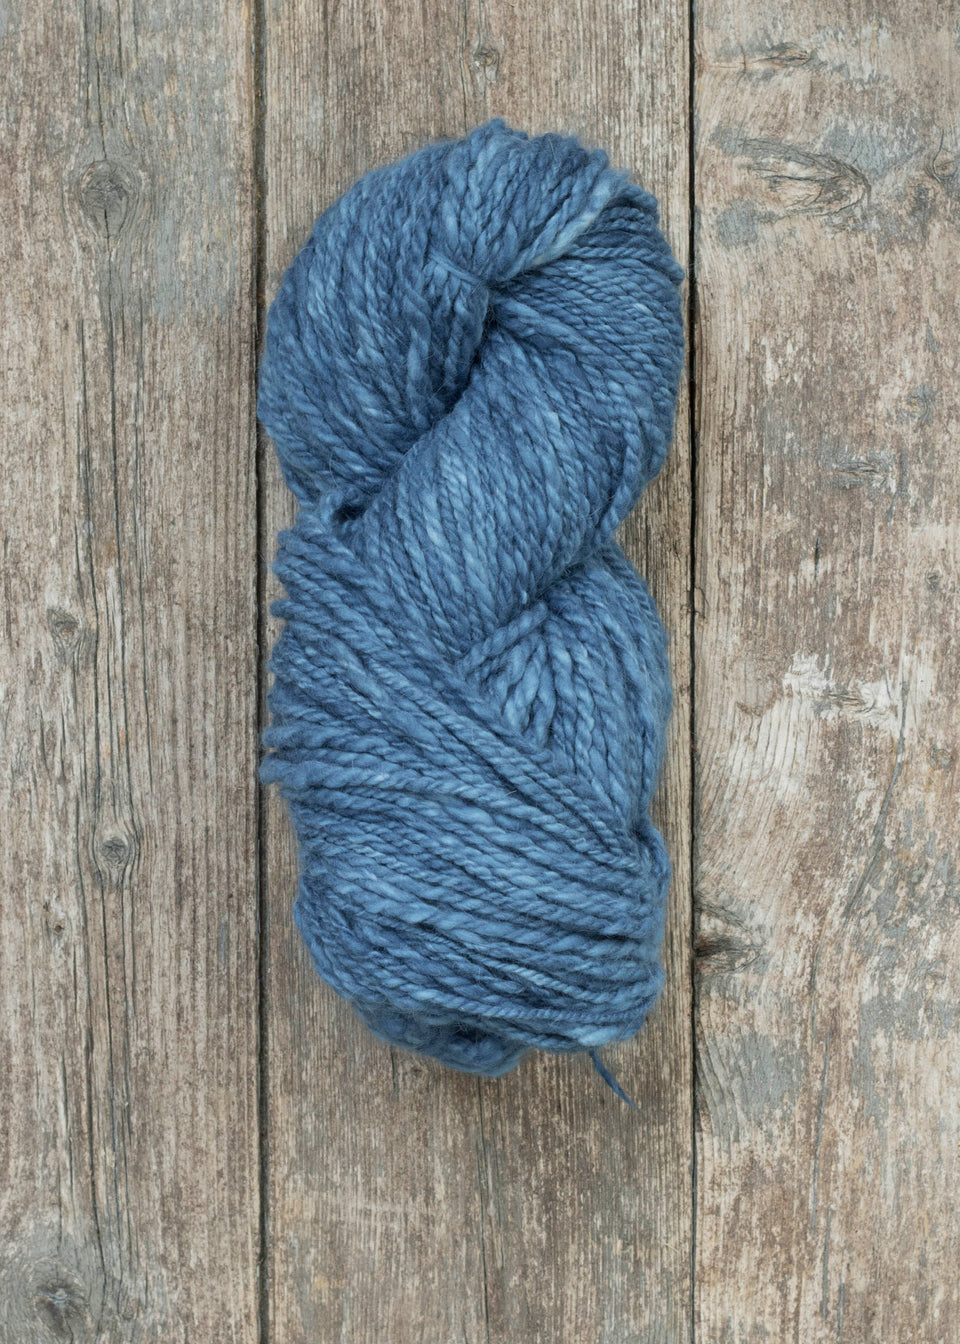 handspun yarn, hand-dyed in natural indigo. merino and cashmere. shown wound into a skein